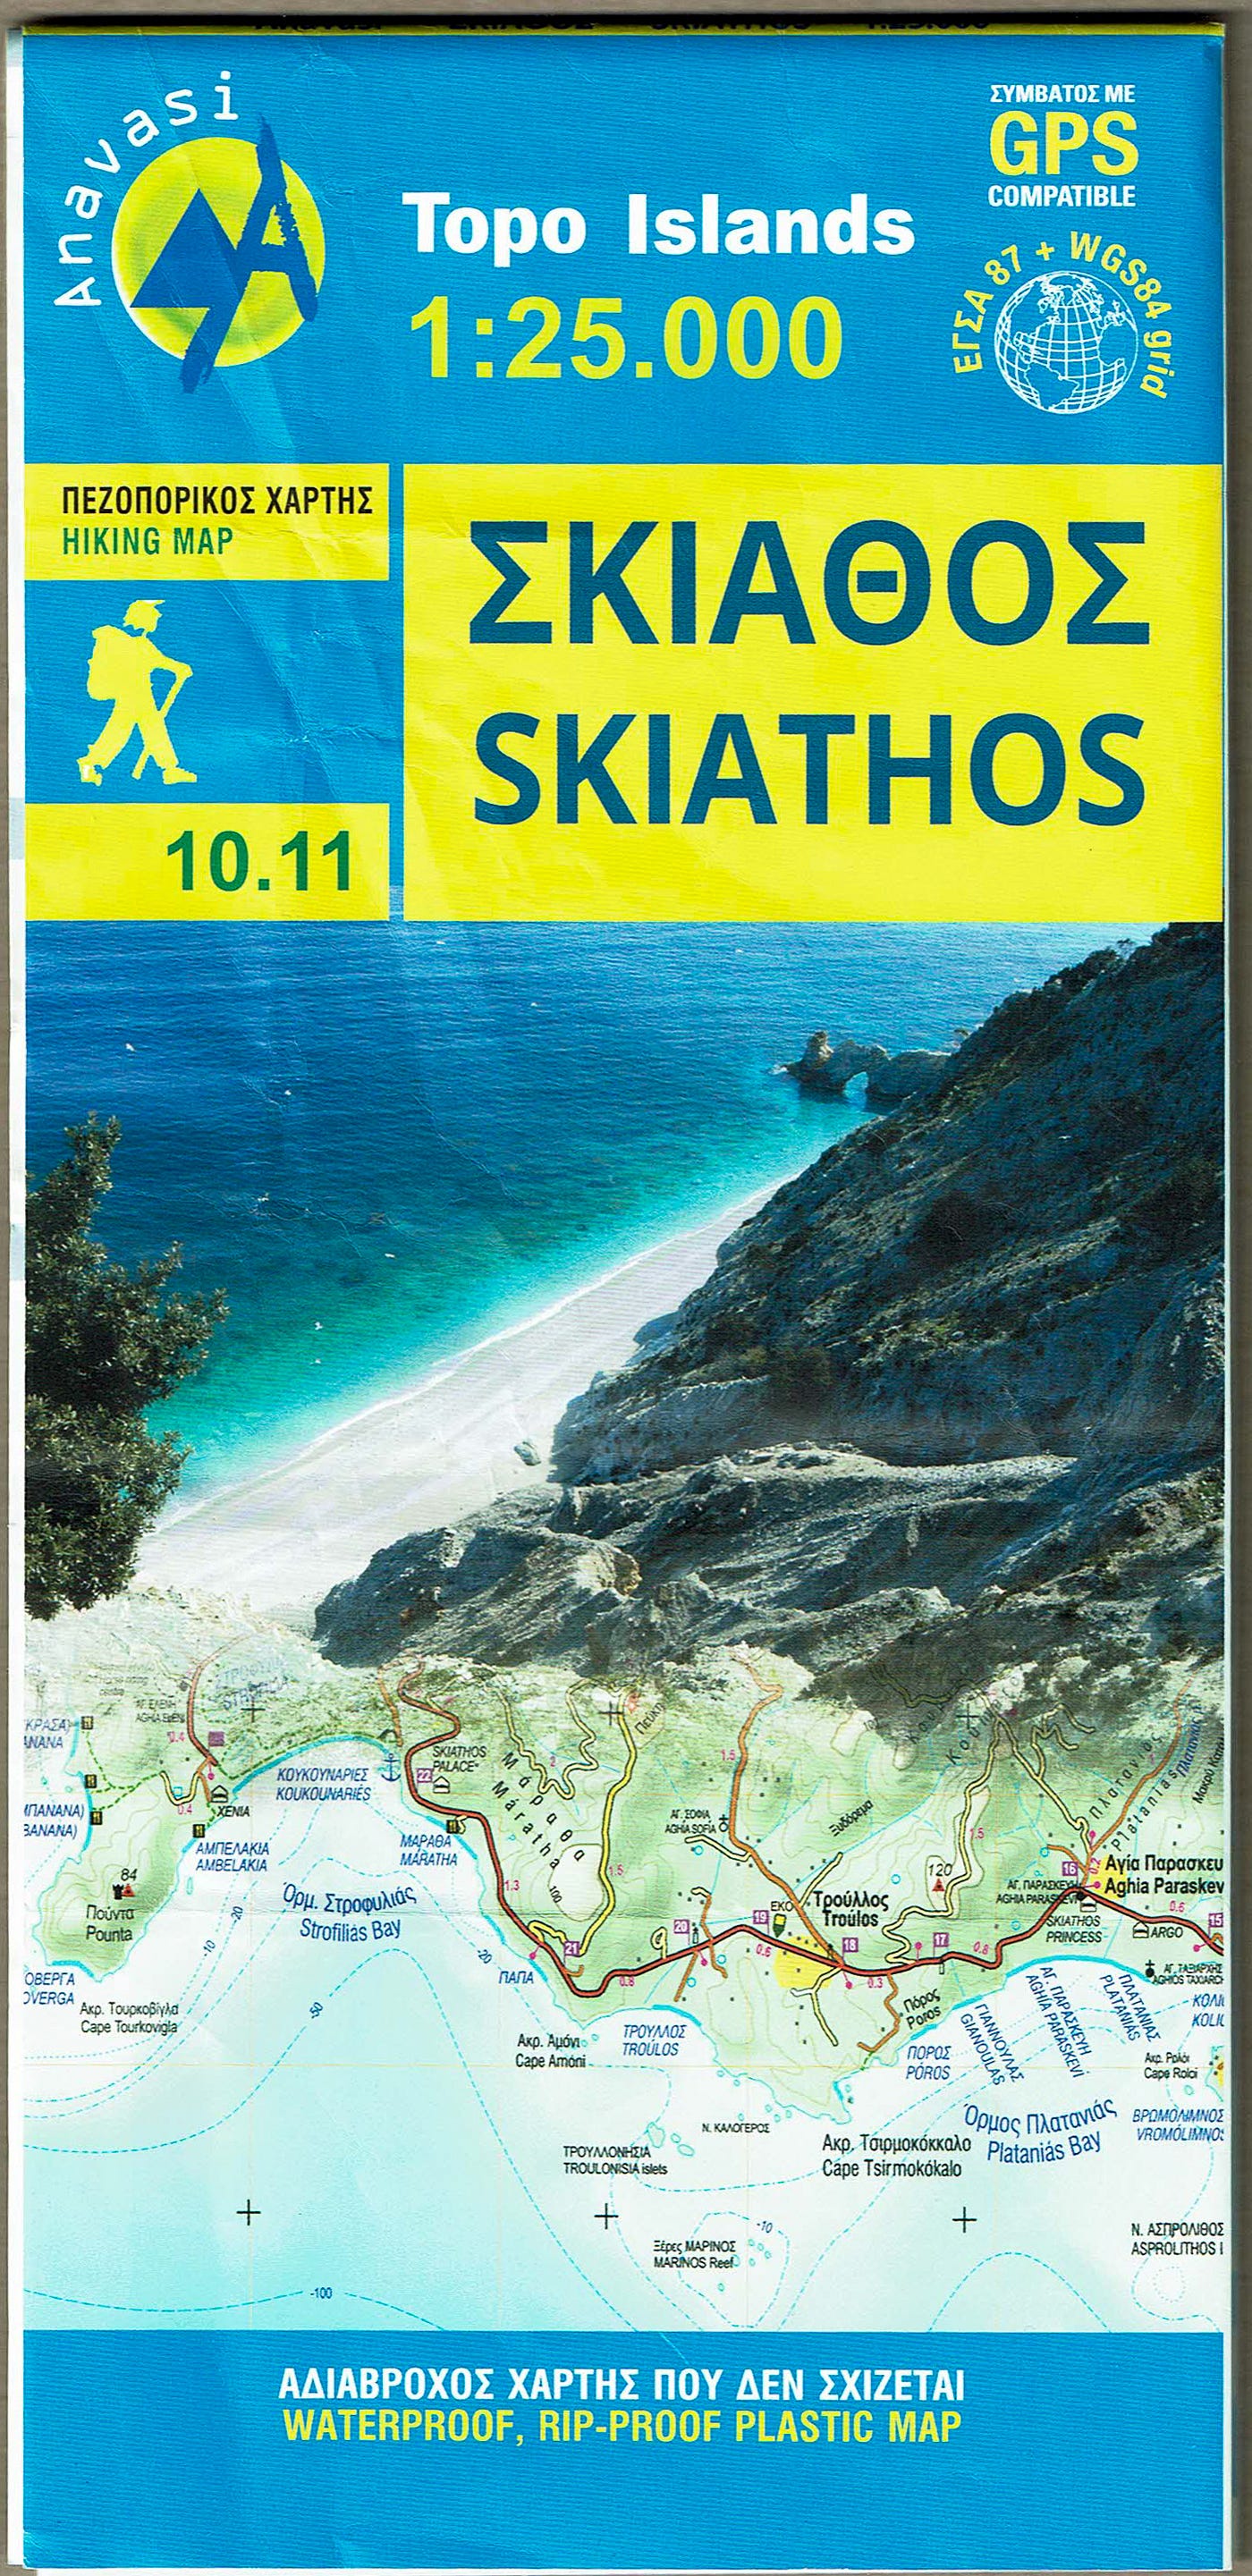 Walking on the Greek Island of Skiathos | by Stuart Aken | Medium